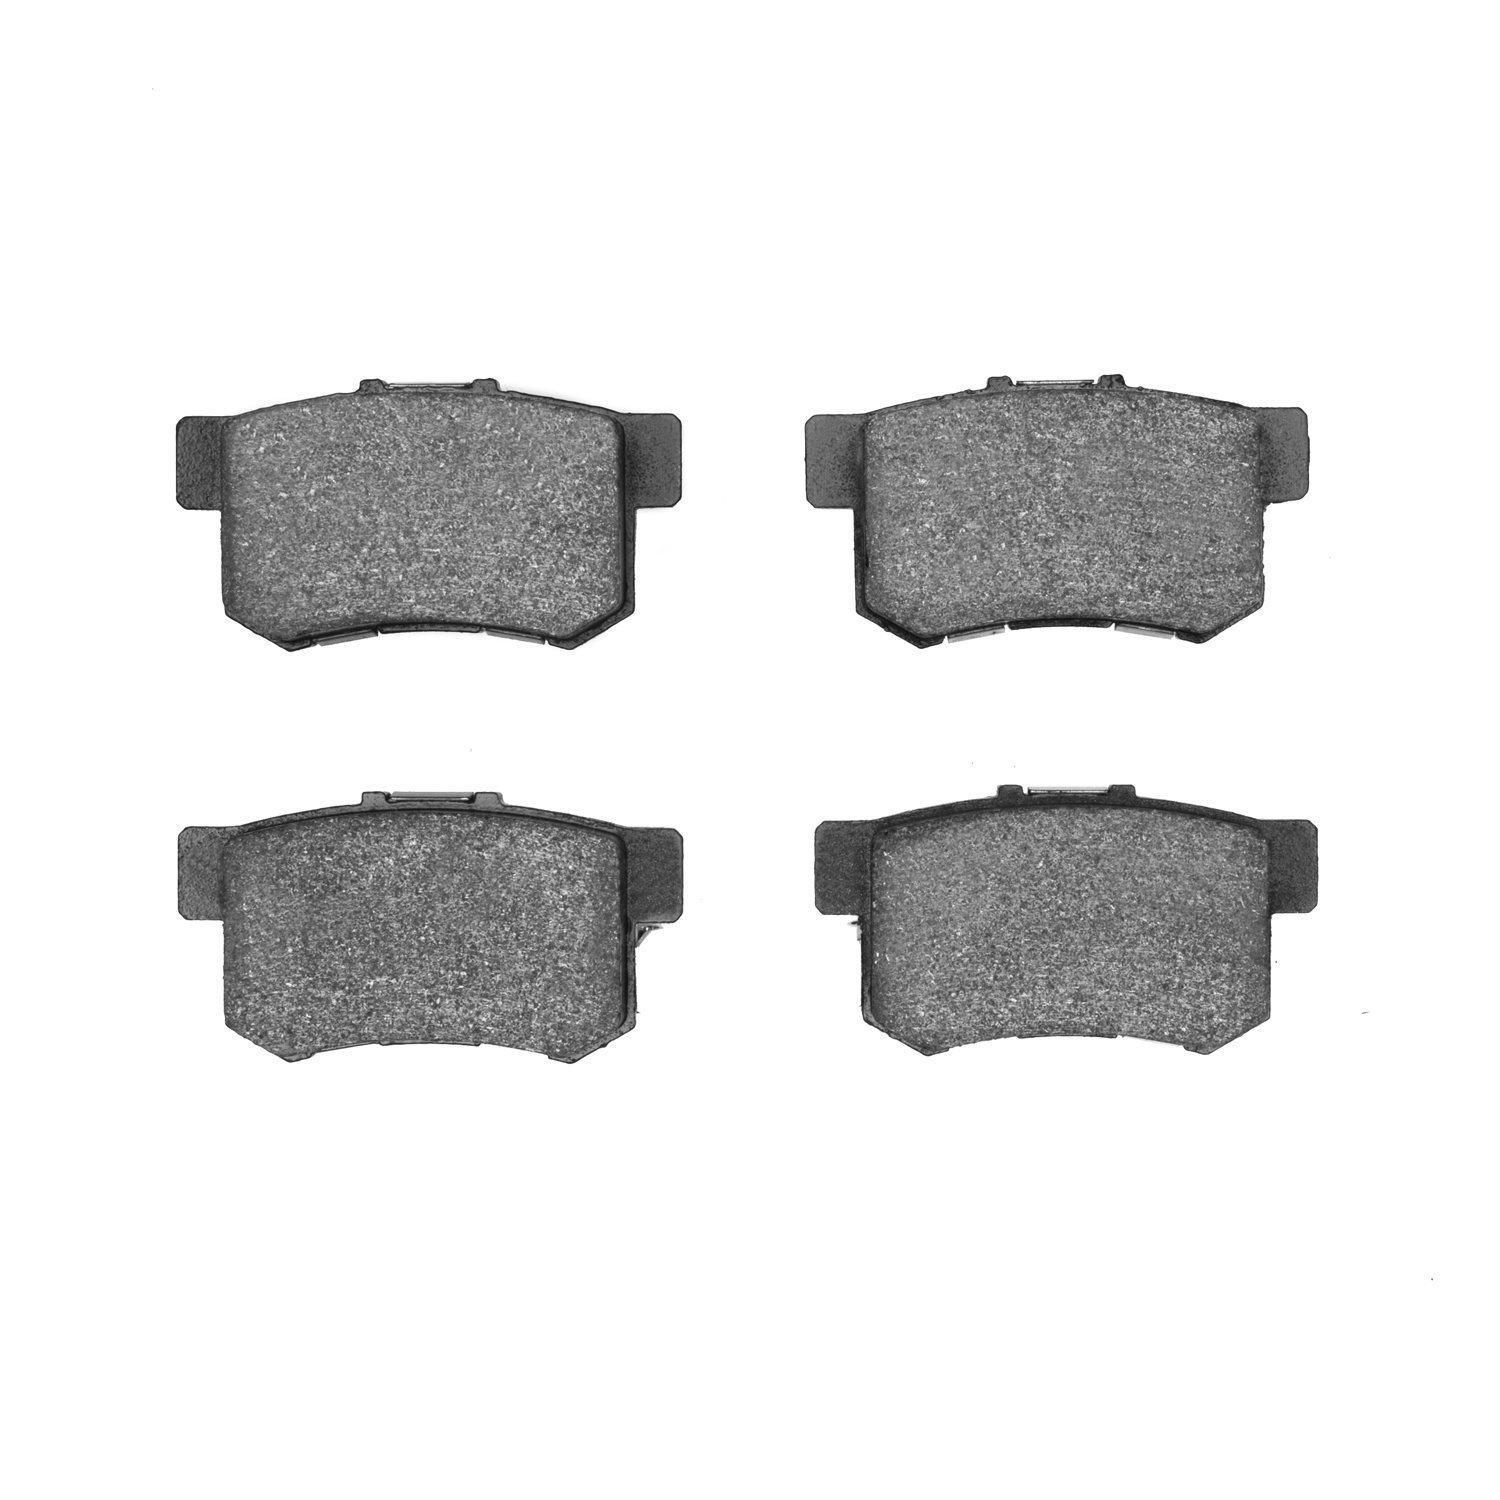 1310-0537-00 3000-Series Ceramic Brake Pads, Fits Select Multiple Makes/Models, Position: Rear